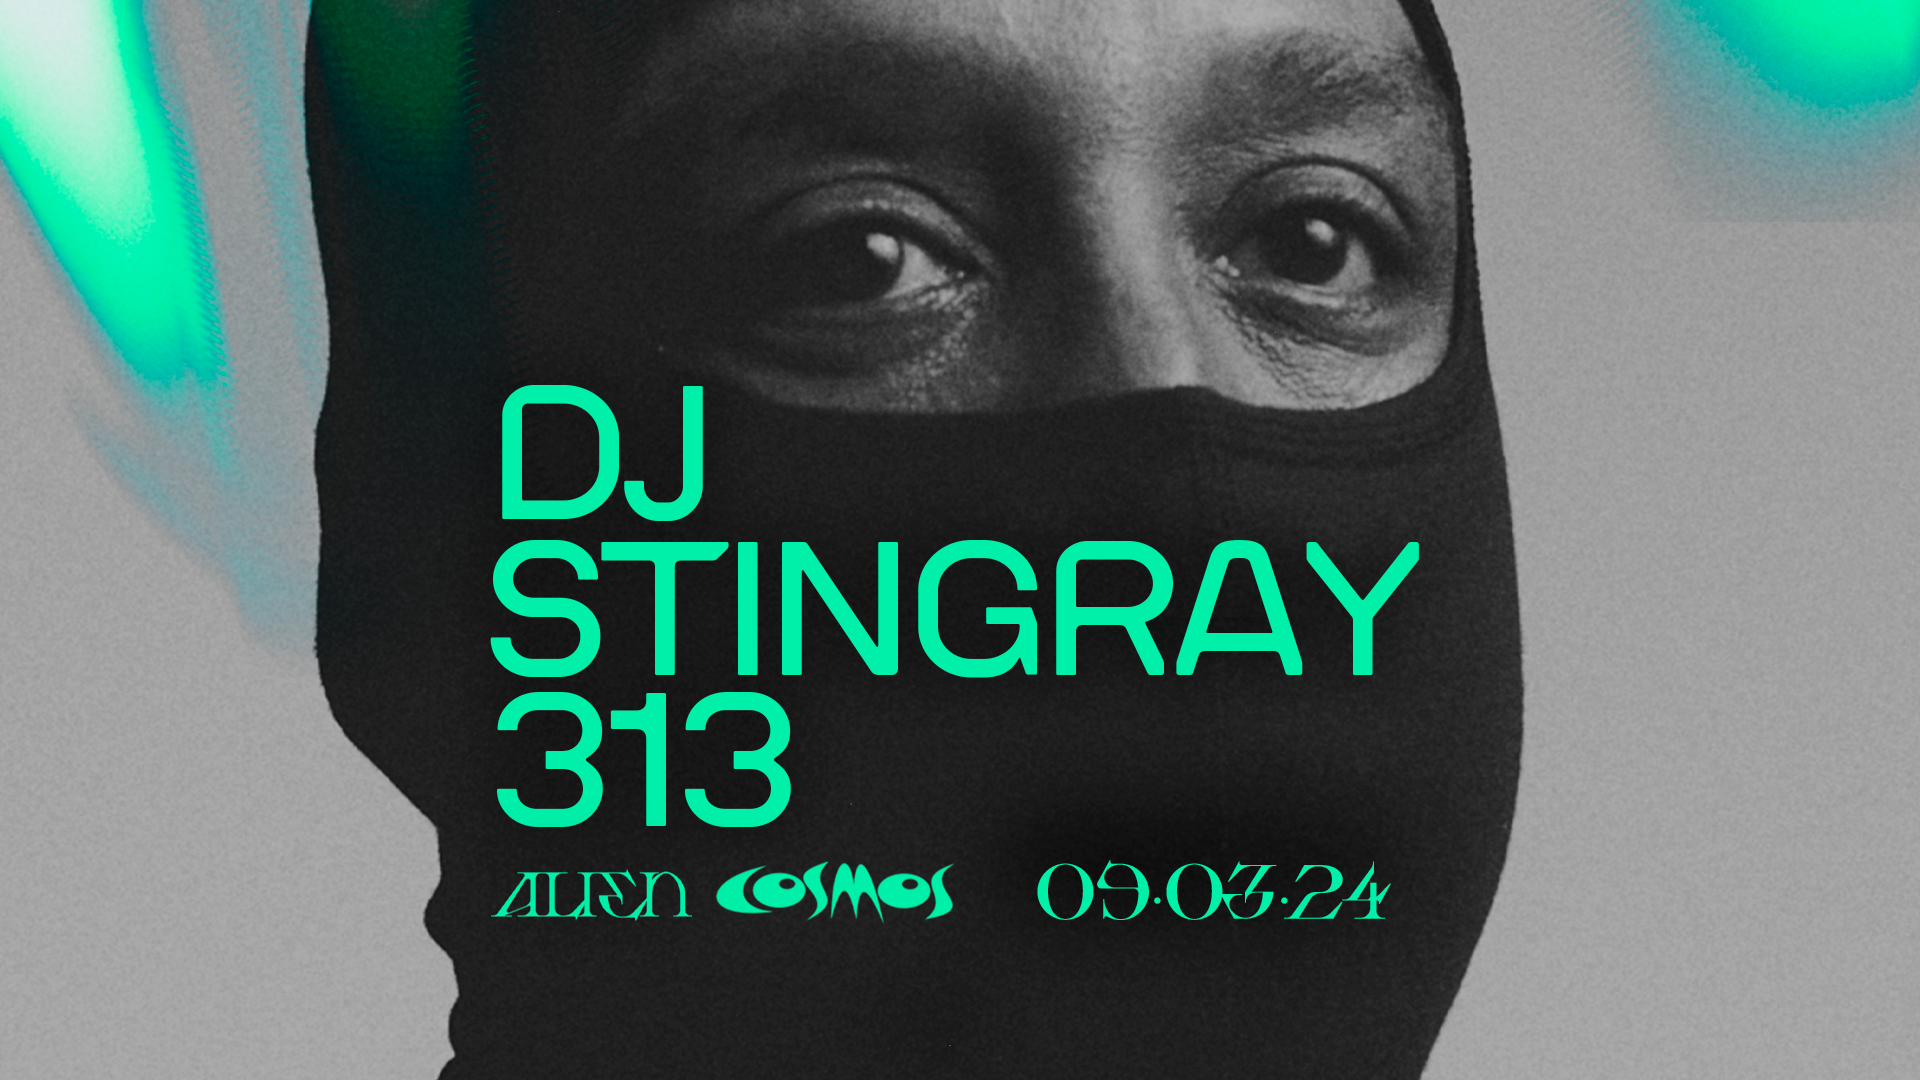 Alien with DJ STINGRAY 313 - フライヤー表